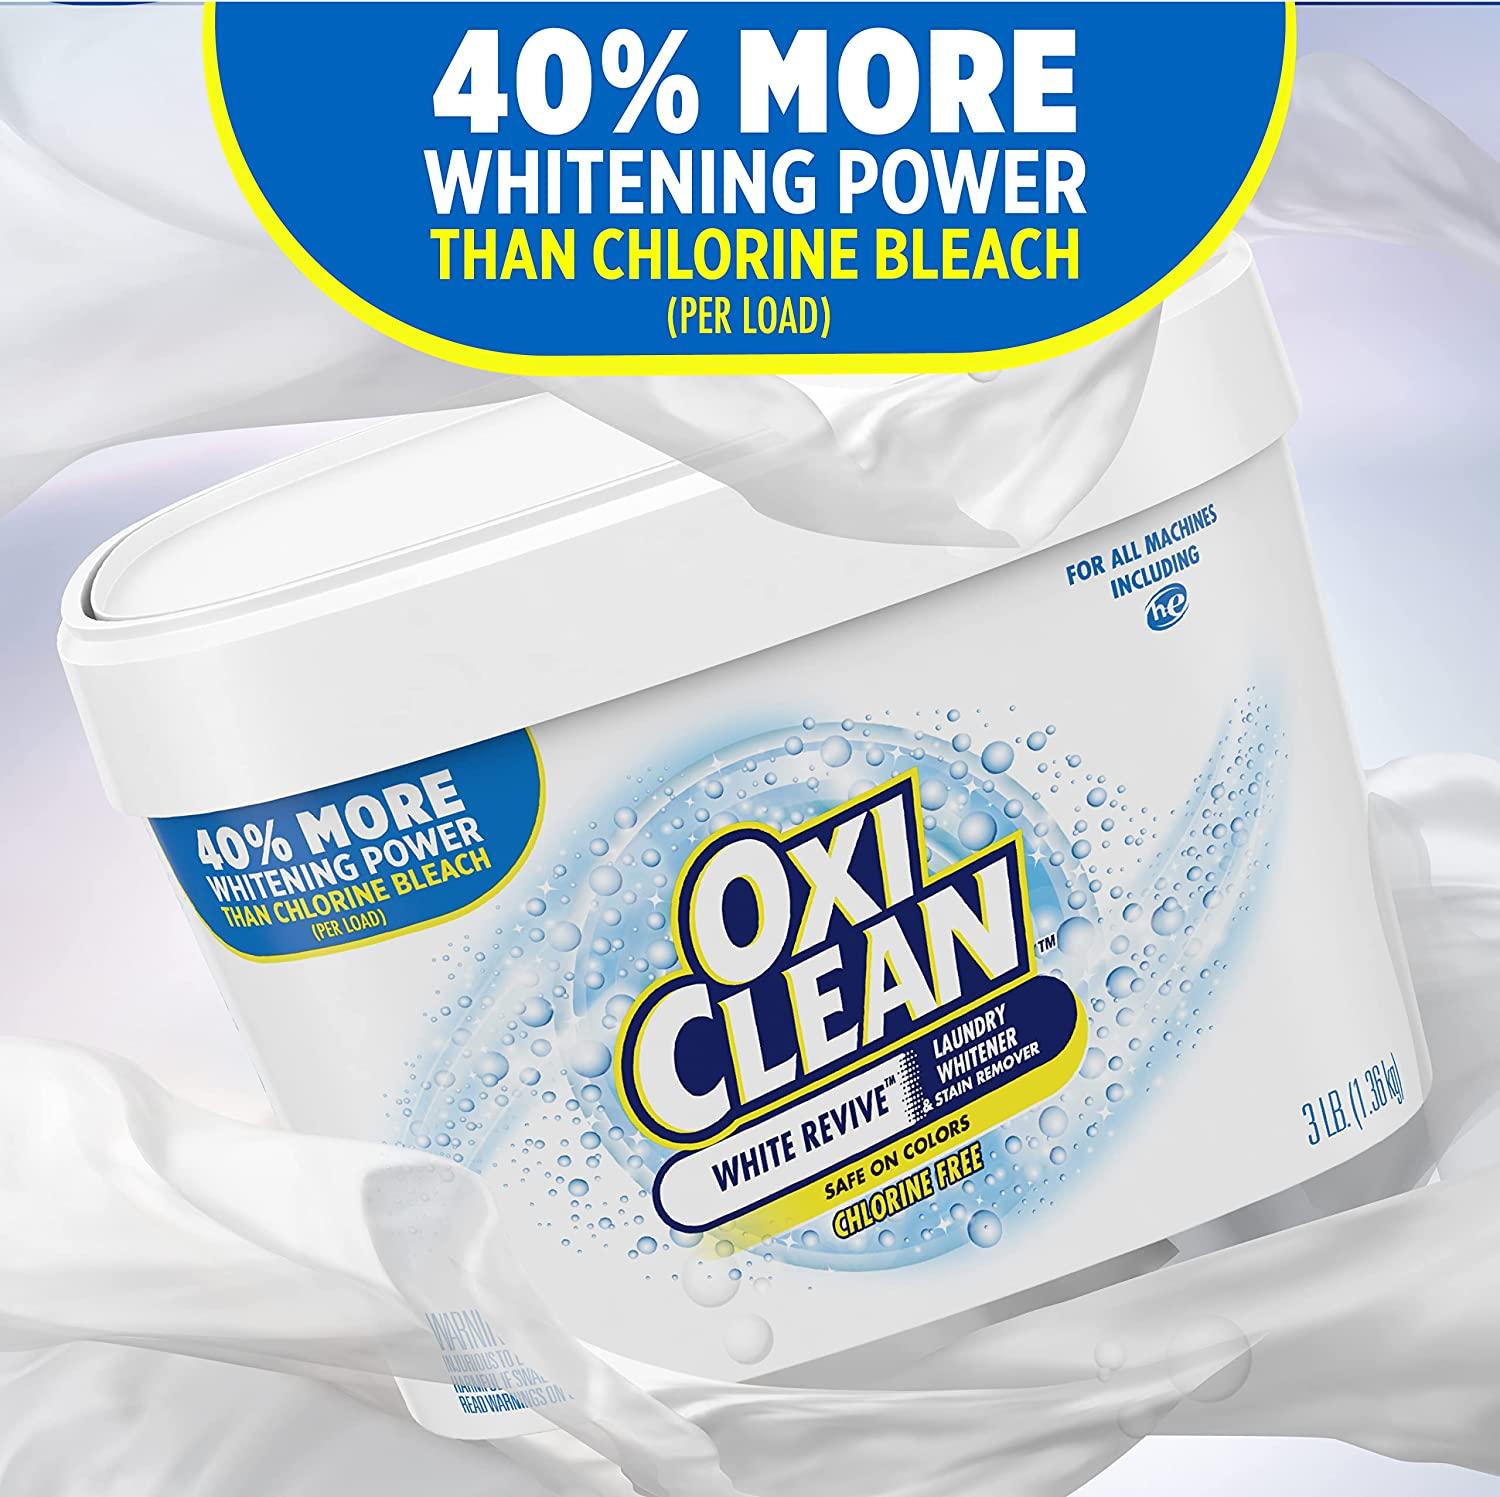 Oxi Clean White Revive Laundry Whitener & Stain Remover 3 Lb, Powder